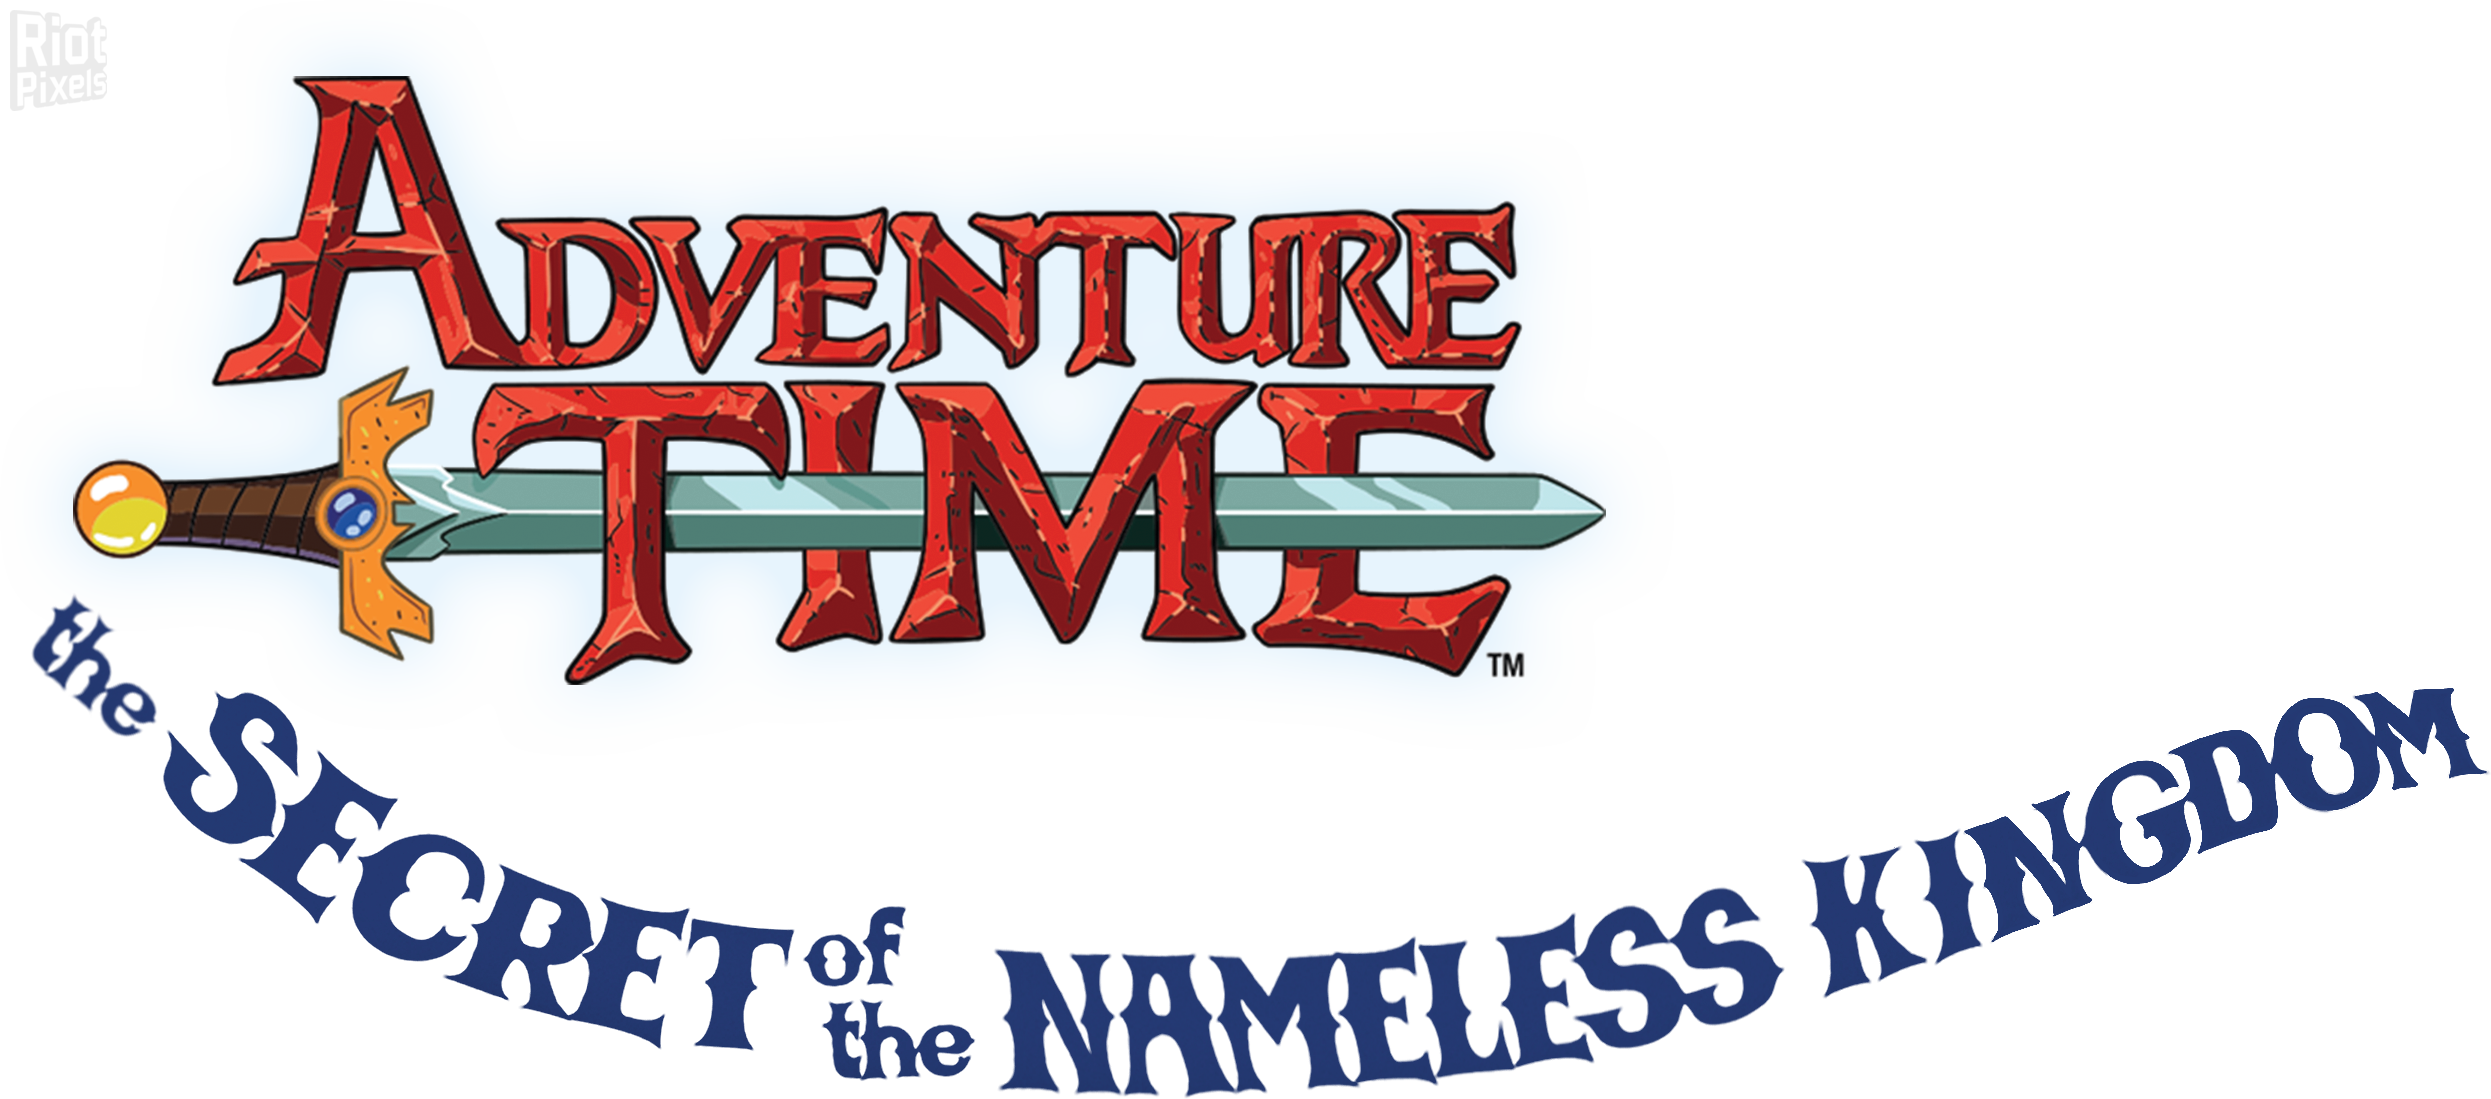 Adventure time secret of the nameless kingdom steam фото 56